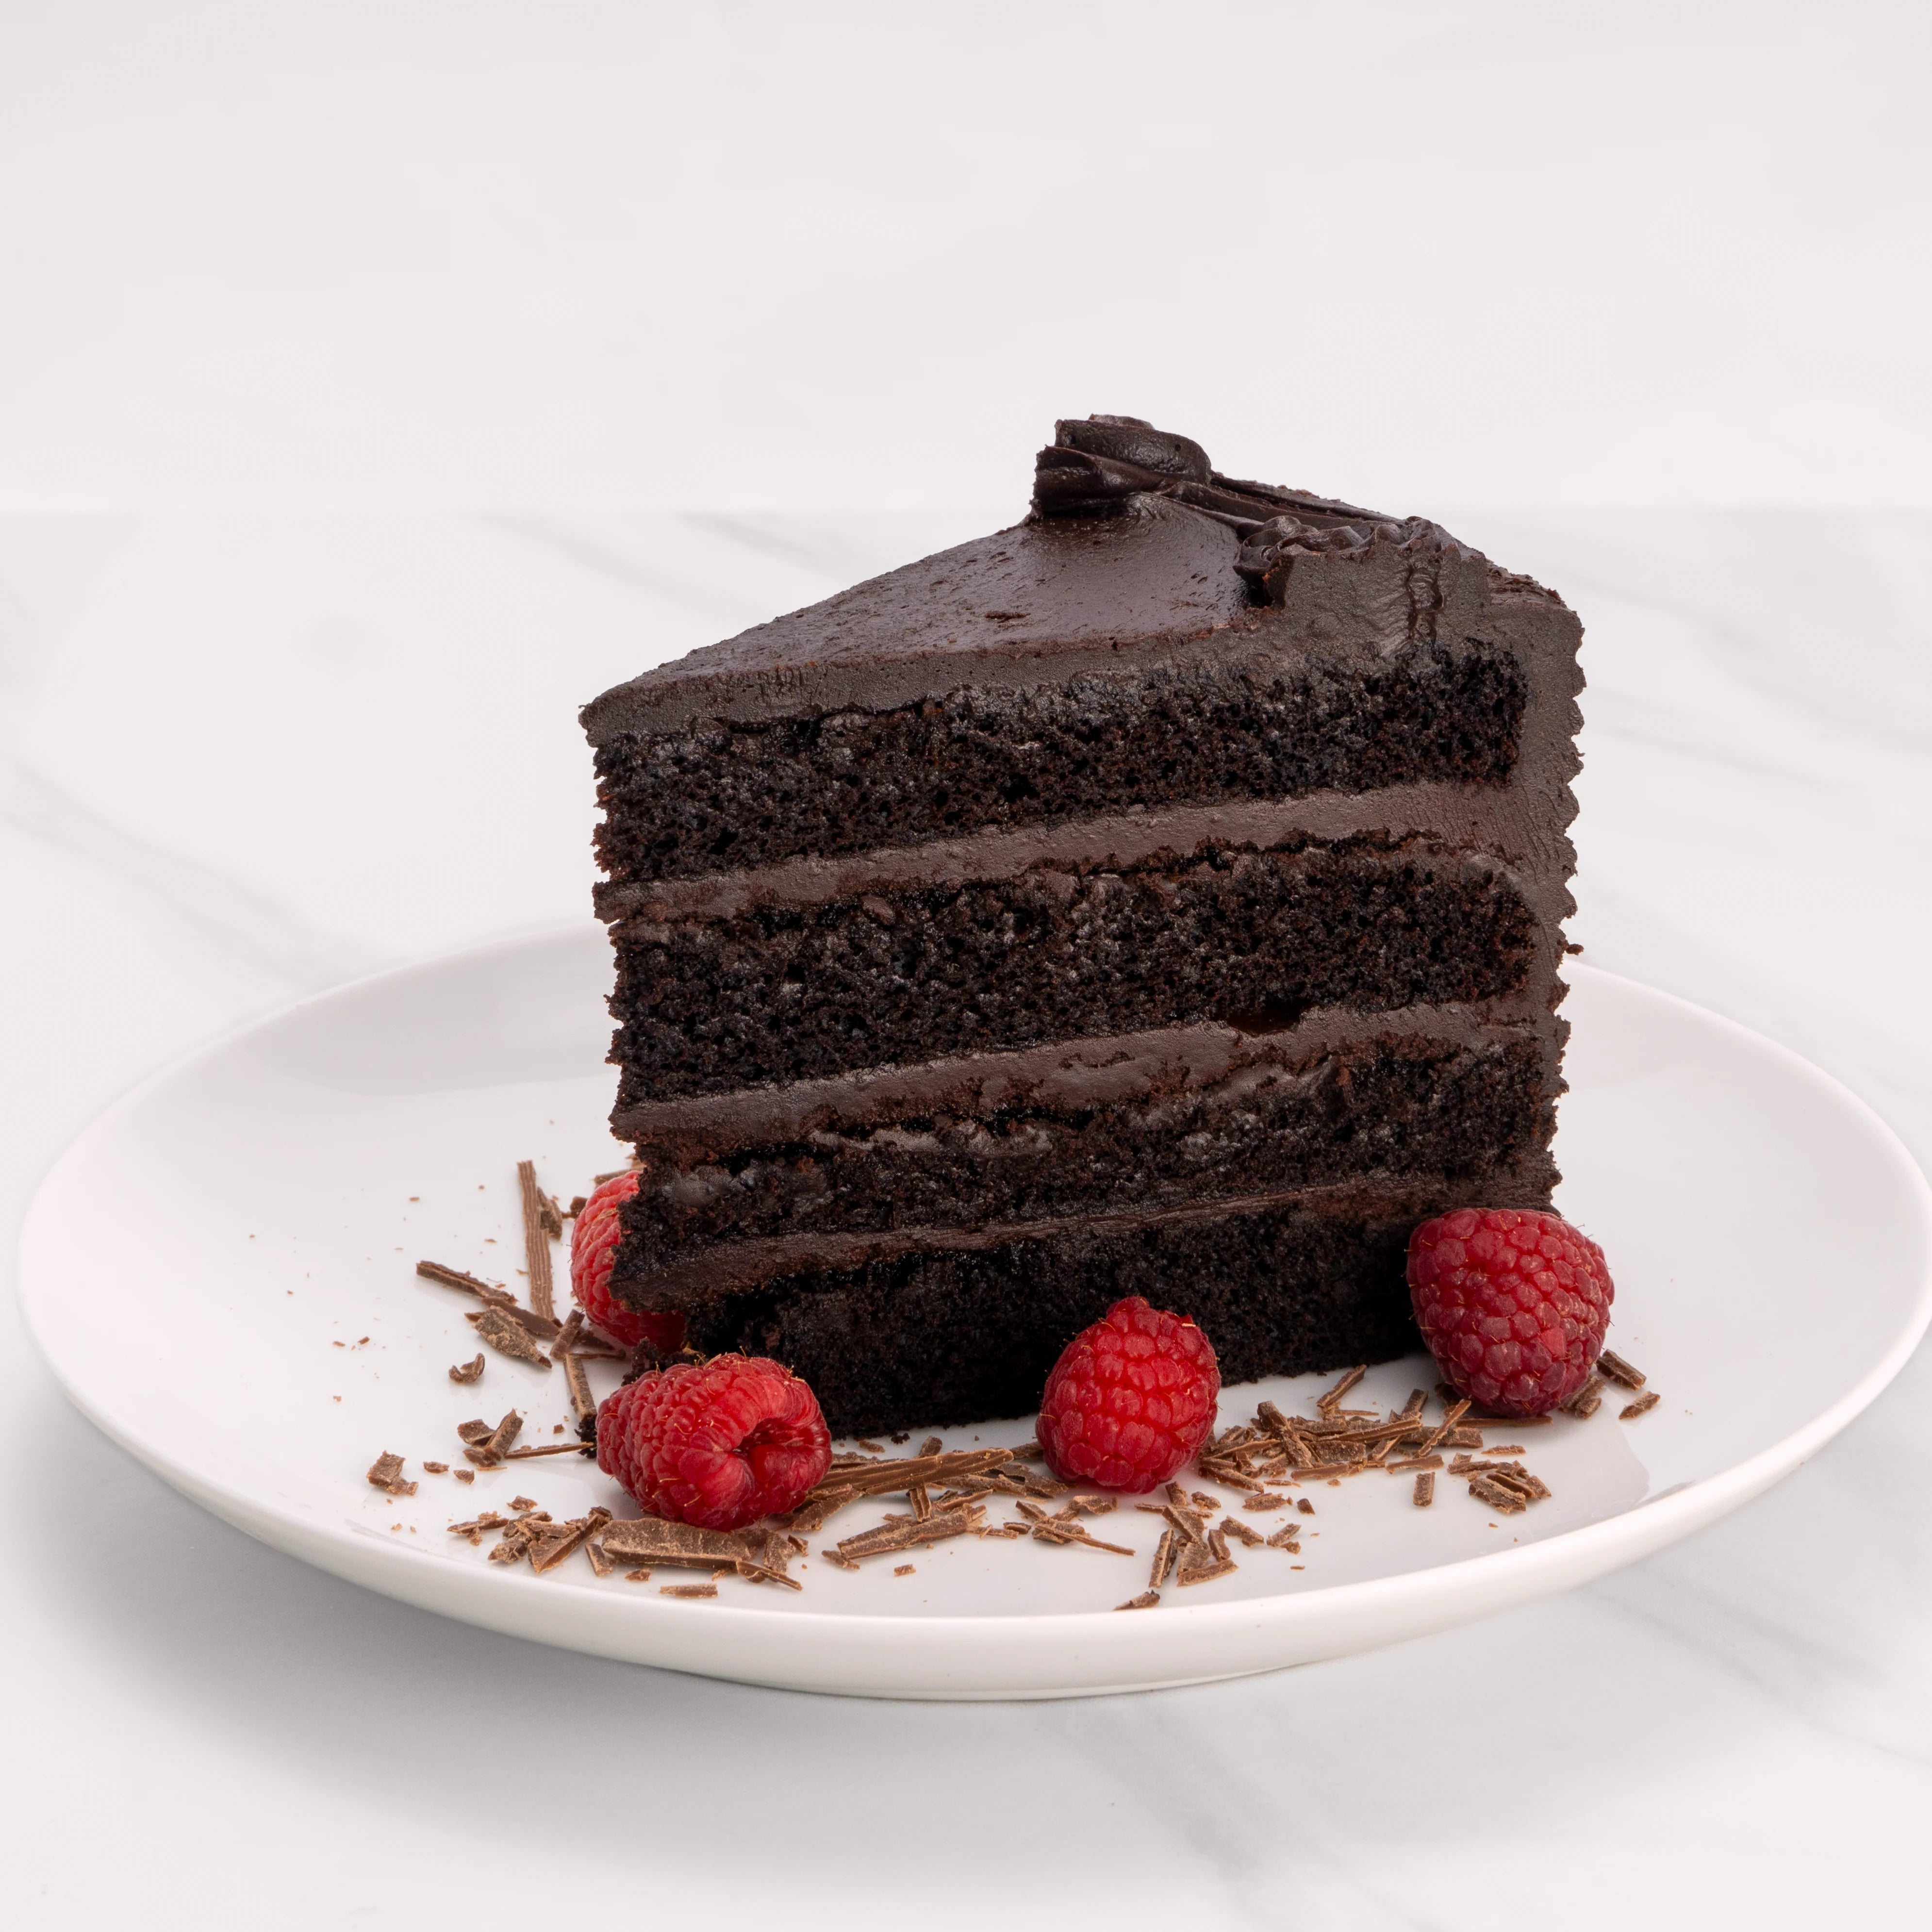 Slice of Heavenly Chocolate Cake garnished with raspberries and chocolate.